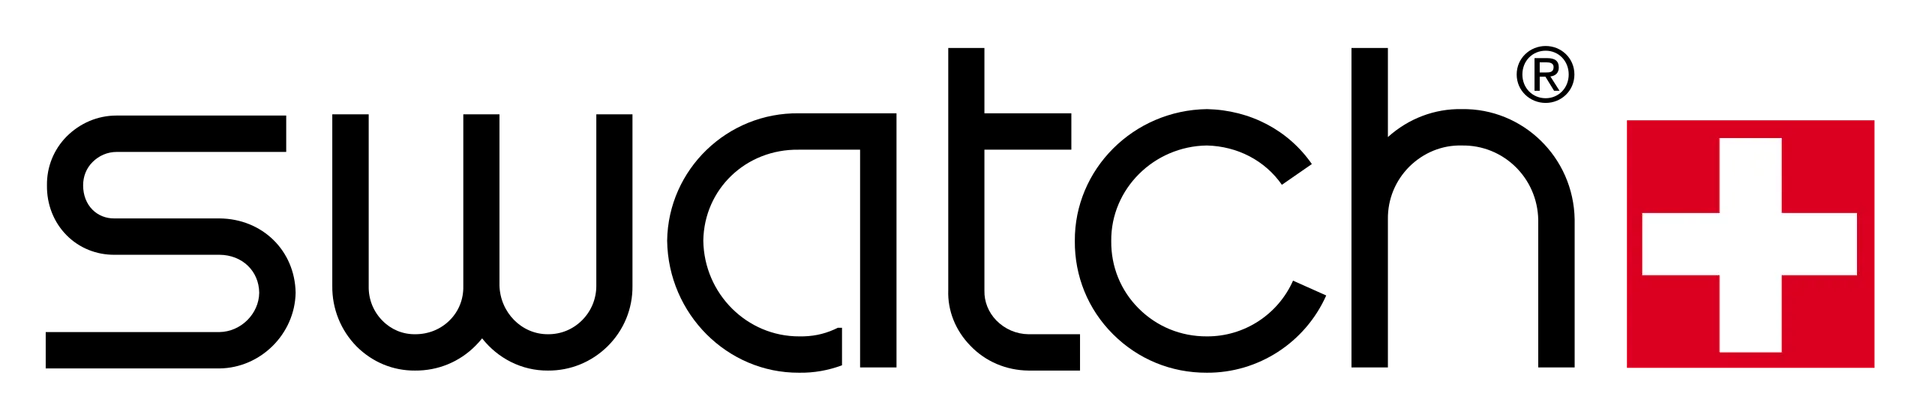 SWATCH logo du catalogue